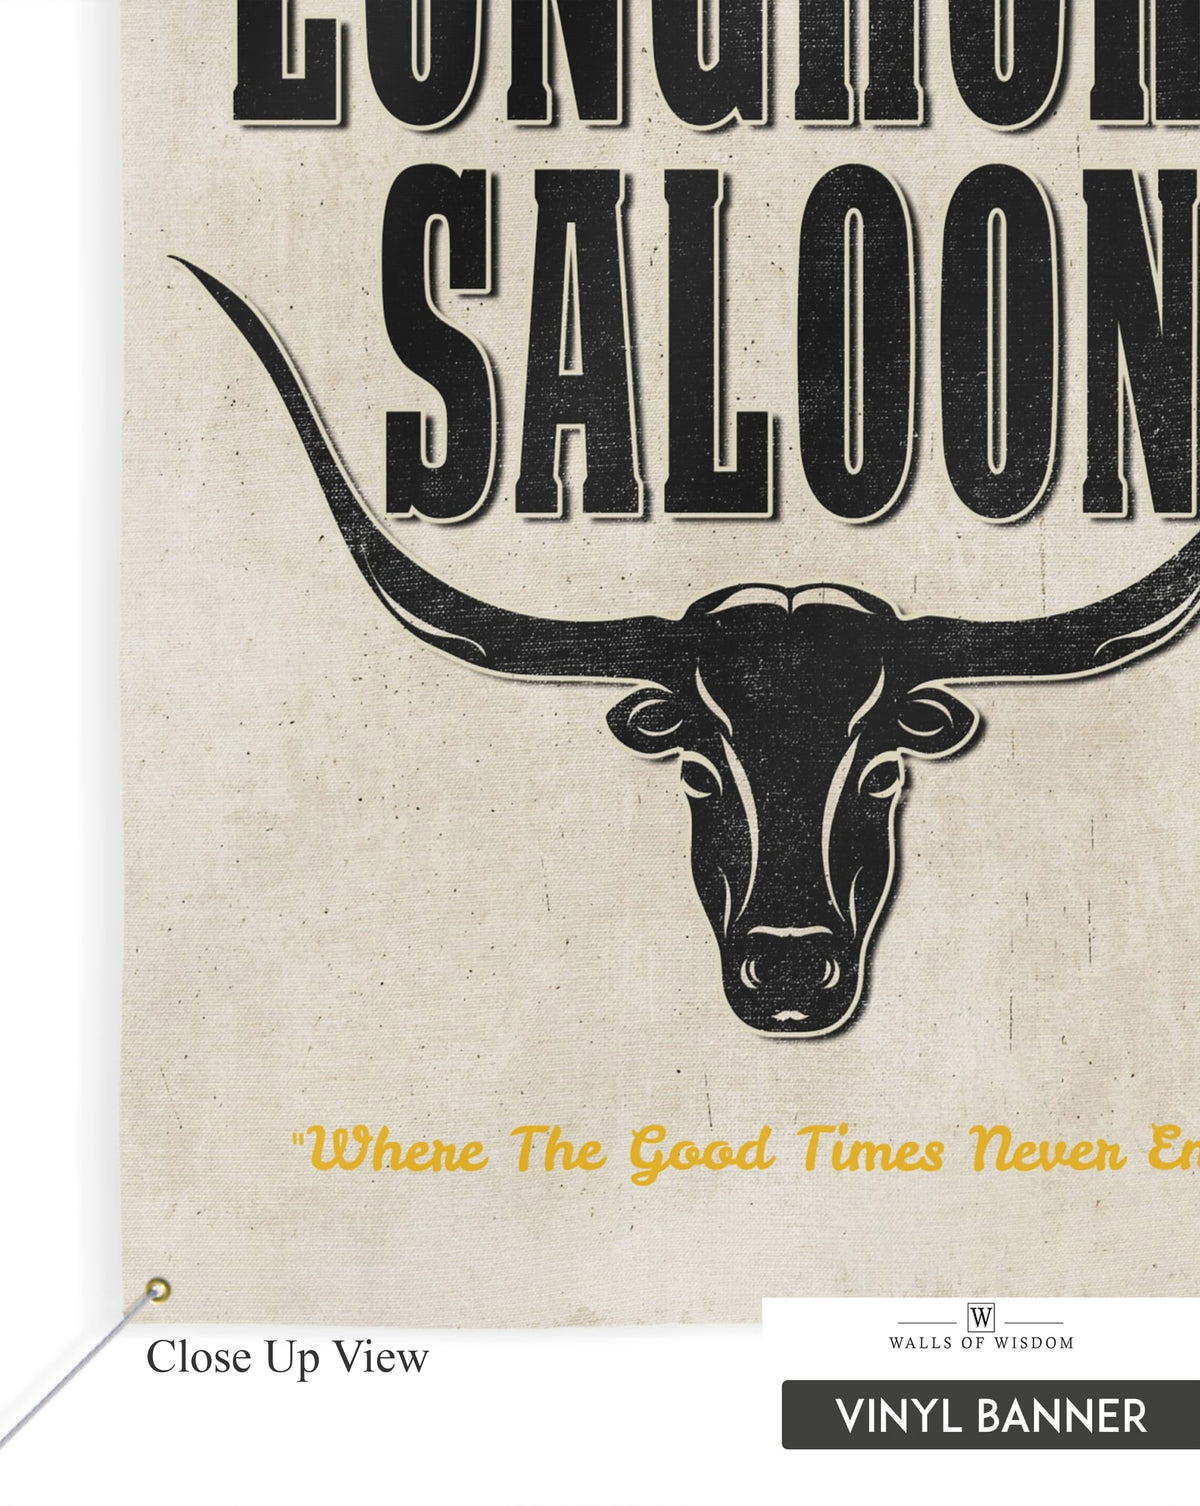 Longhorn Saloon Customizable Backyard Vinyl Sign - Weatherproof Bar & Grill Patio Decor